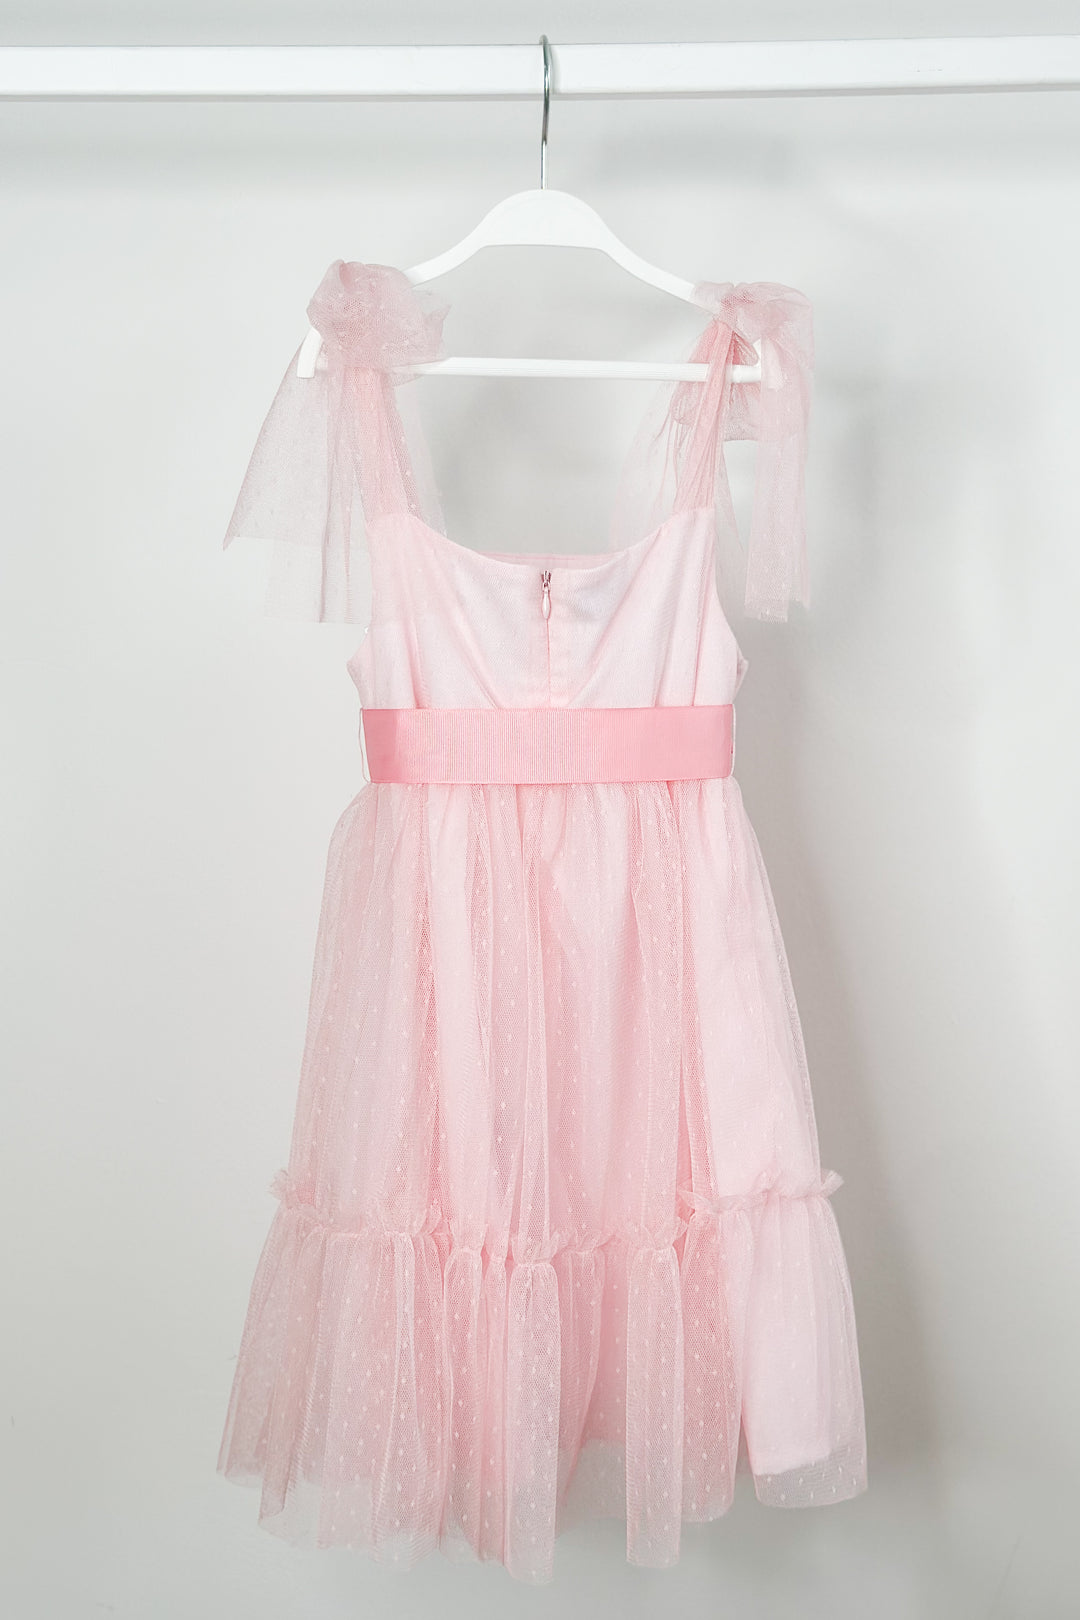 Phi "Aurora" Pink Tulle Dress | Millie and John